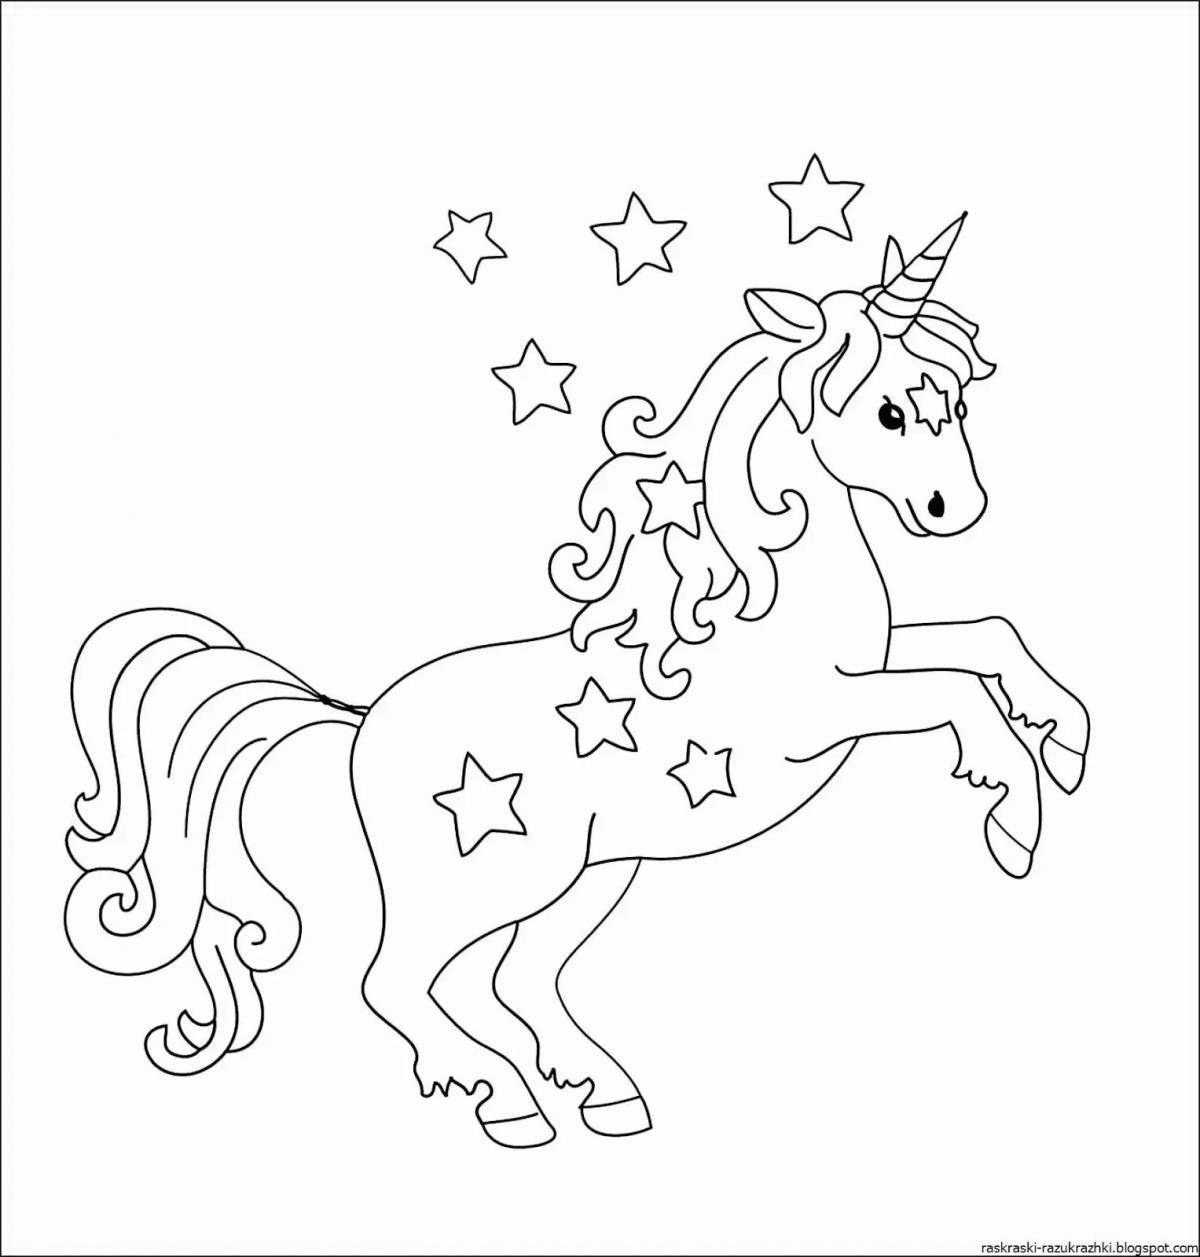 Glitter unicorn coloring picture for kids